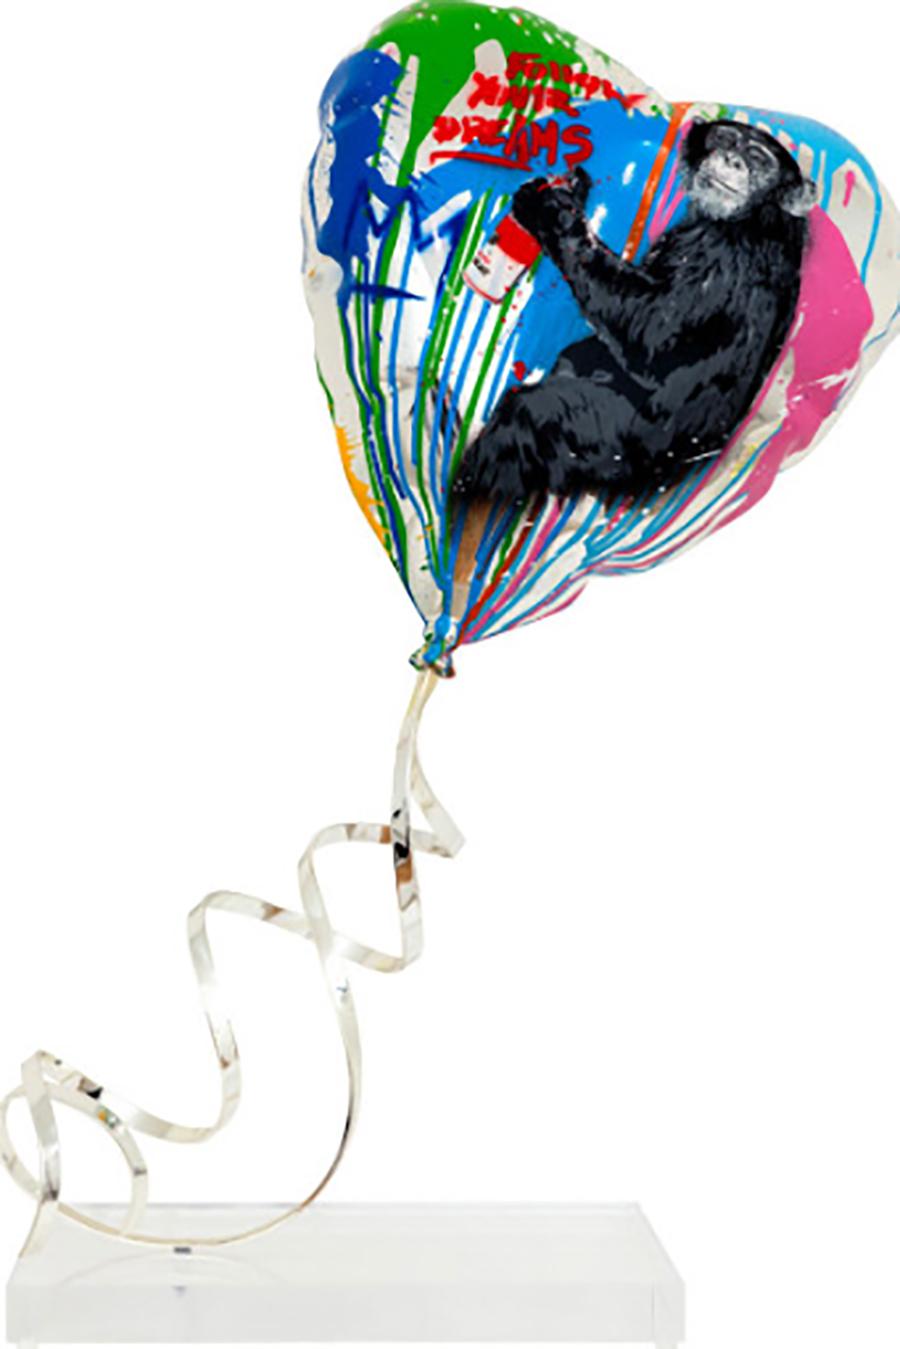 Flying Balloon Heart - Mixed Media Art by Mr. Brainwash